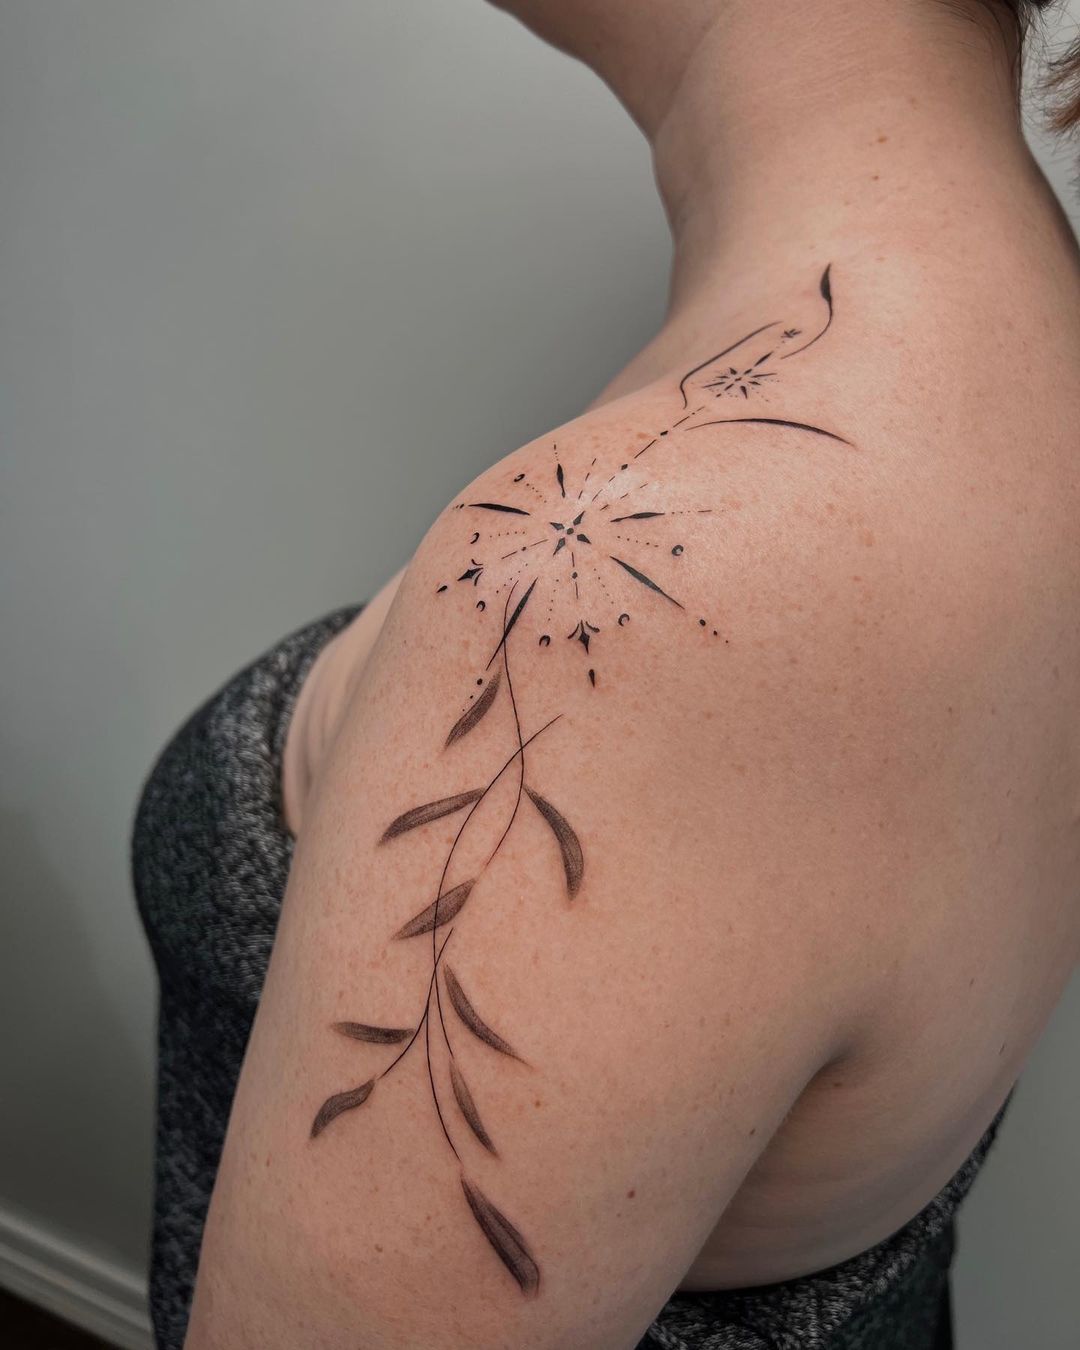 geometric tattoo on shoulder by ankh.jen